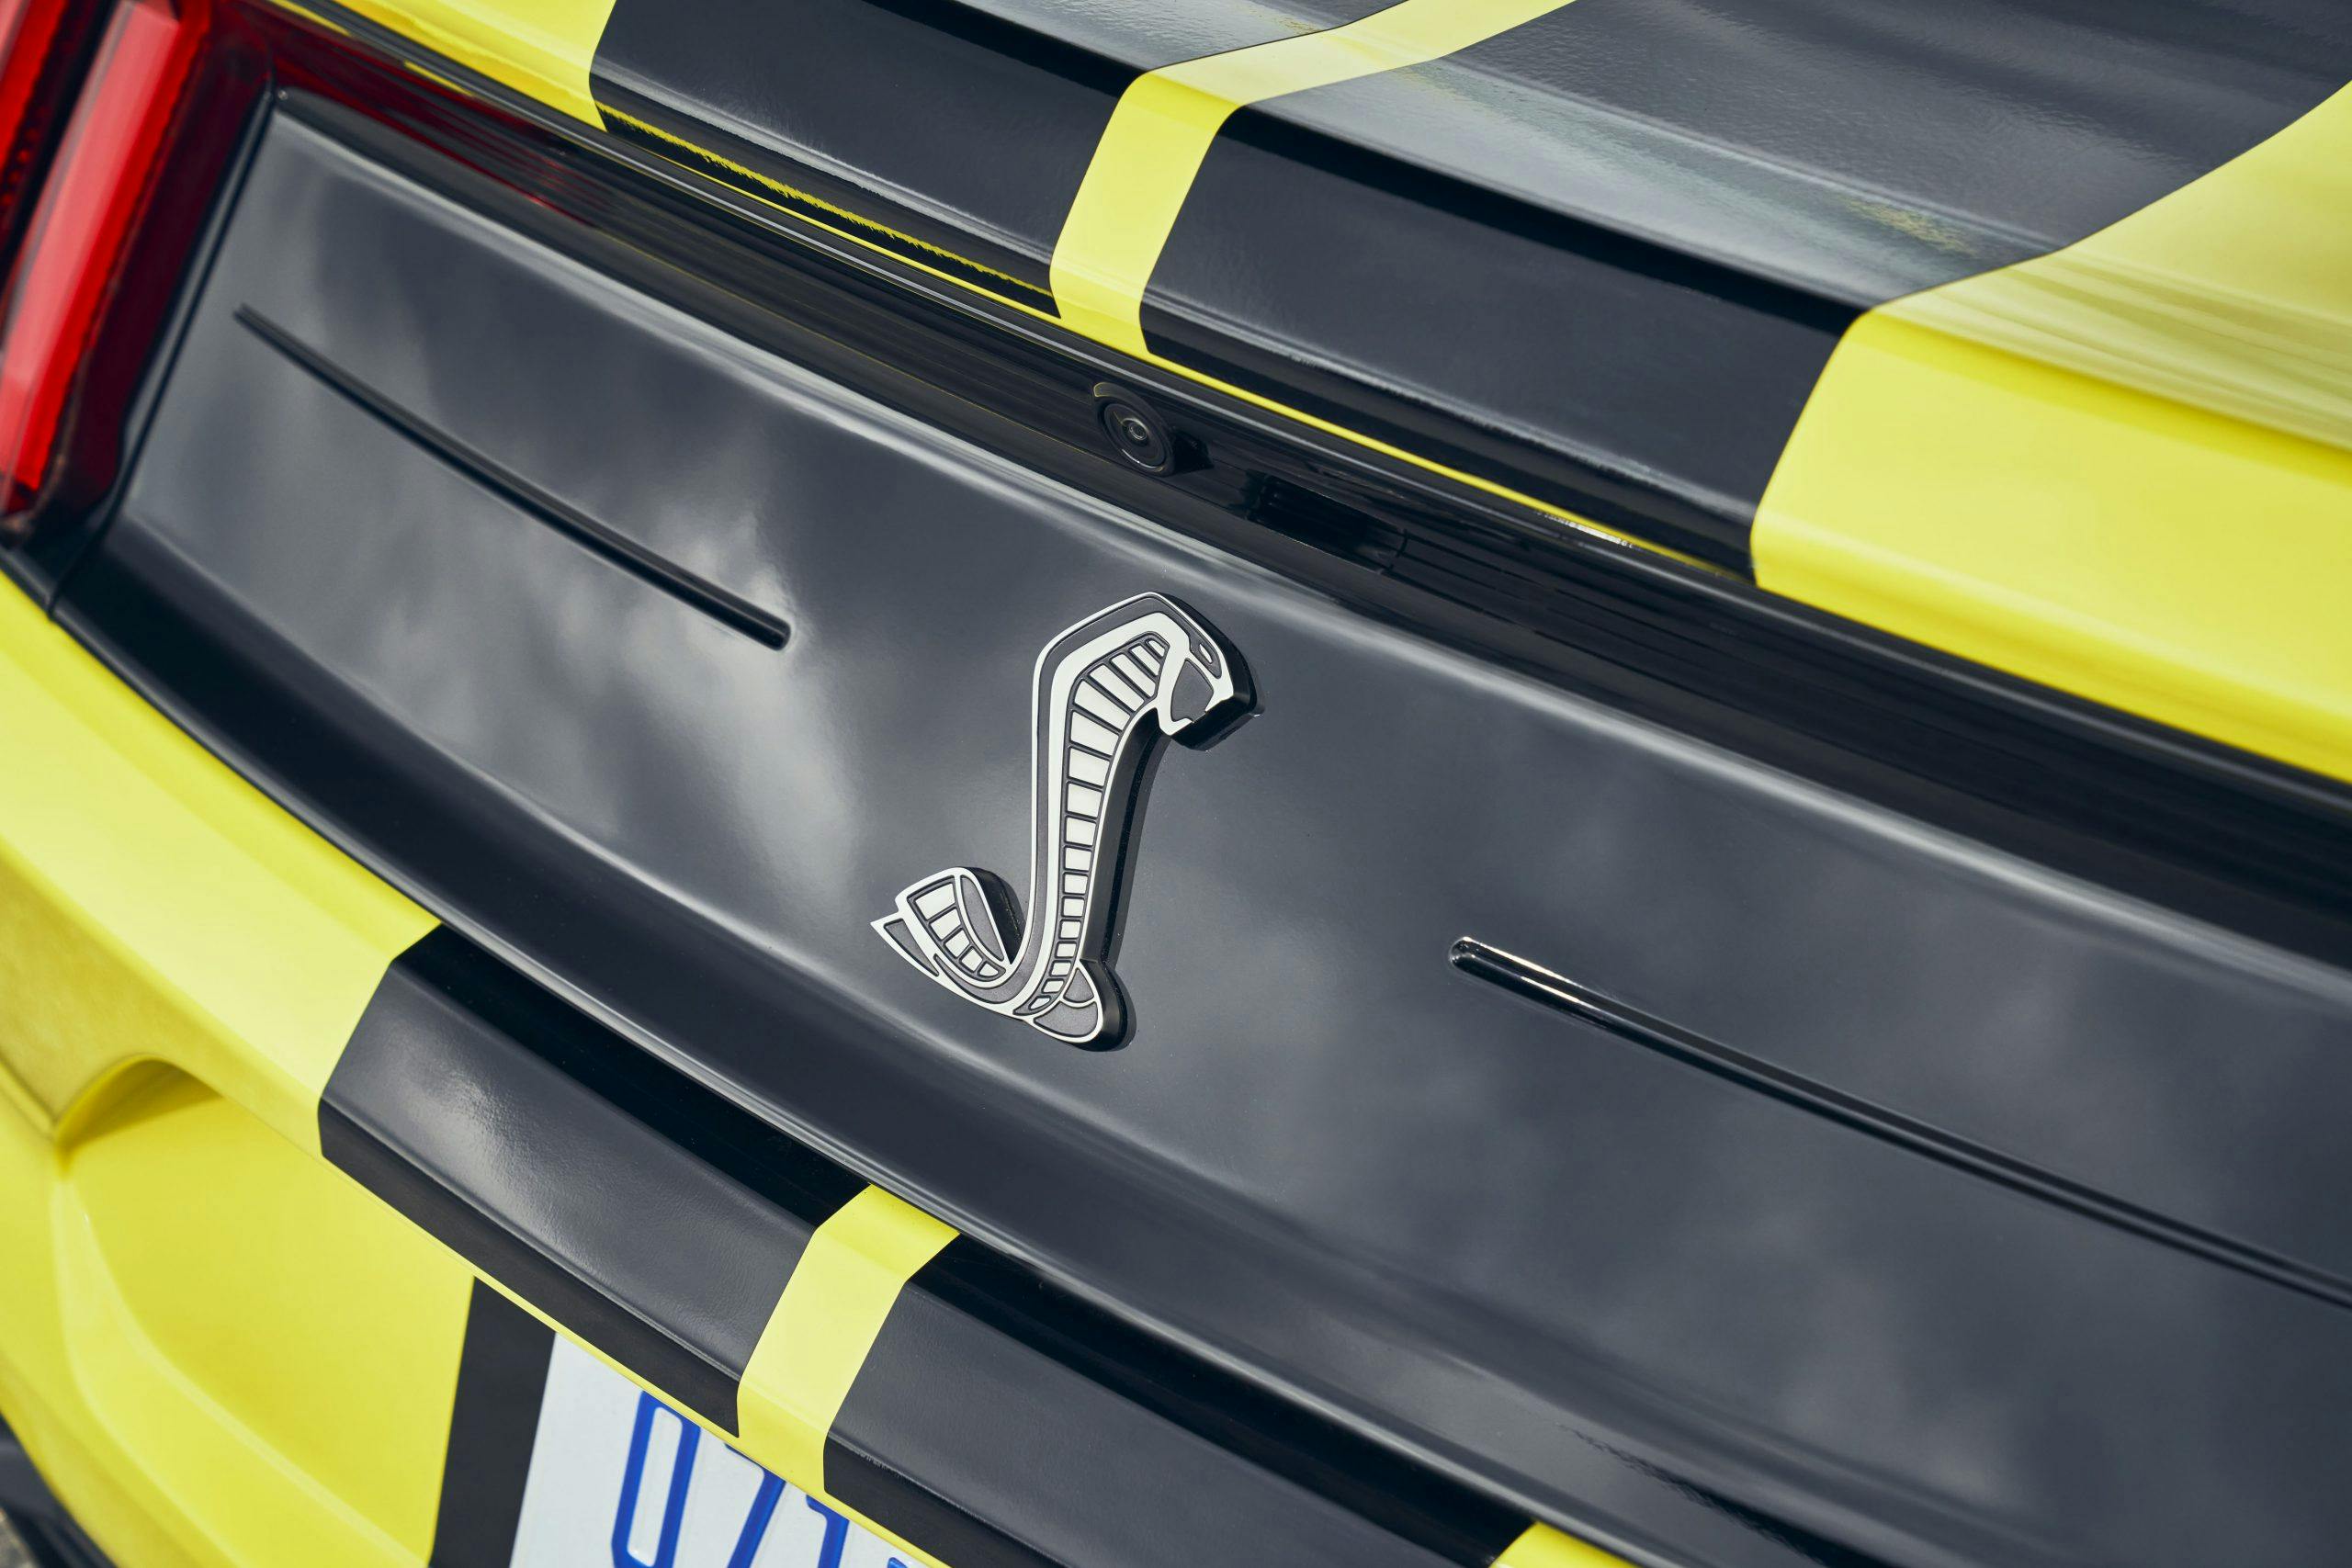 2021 Ford Mustang Shelby GT500 rear cobra emblem detail